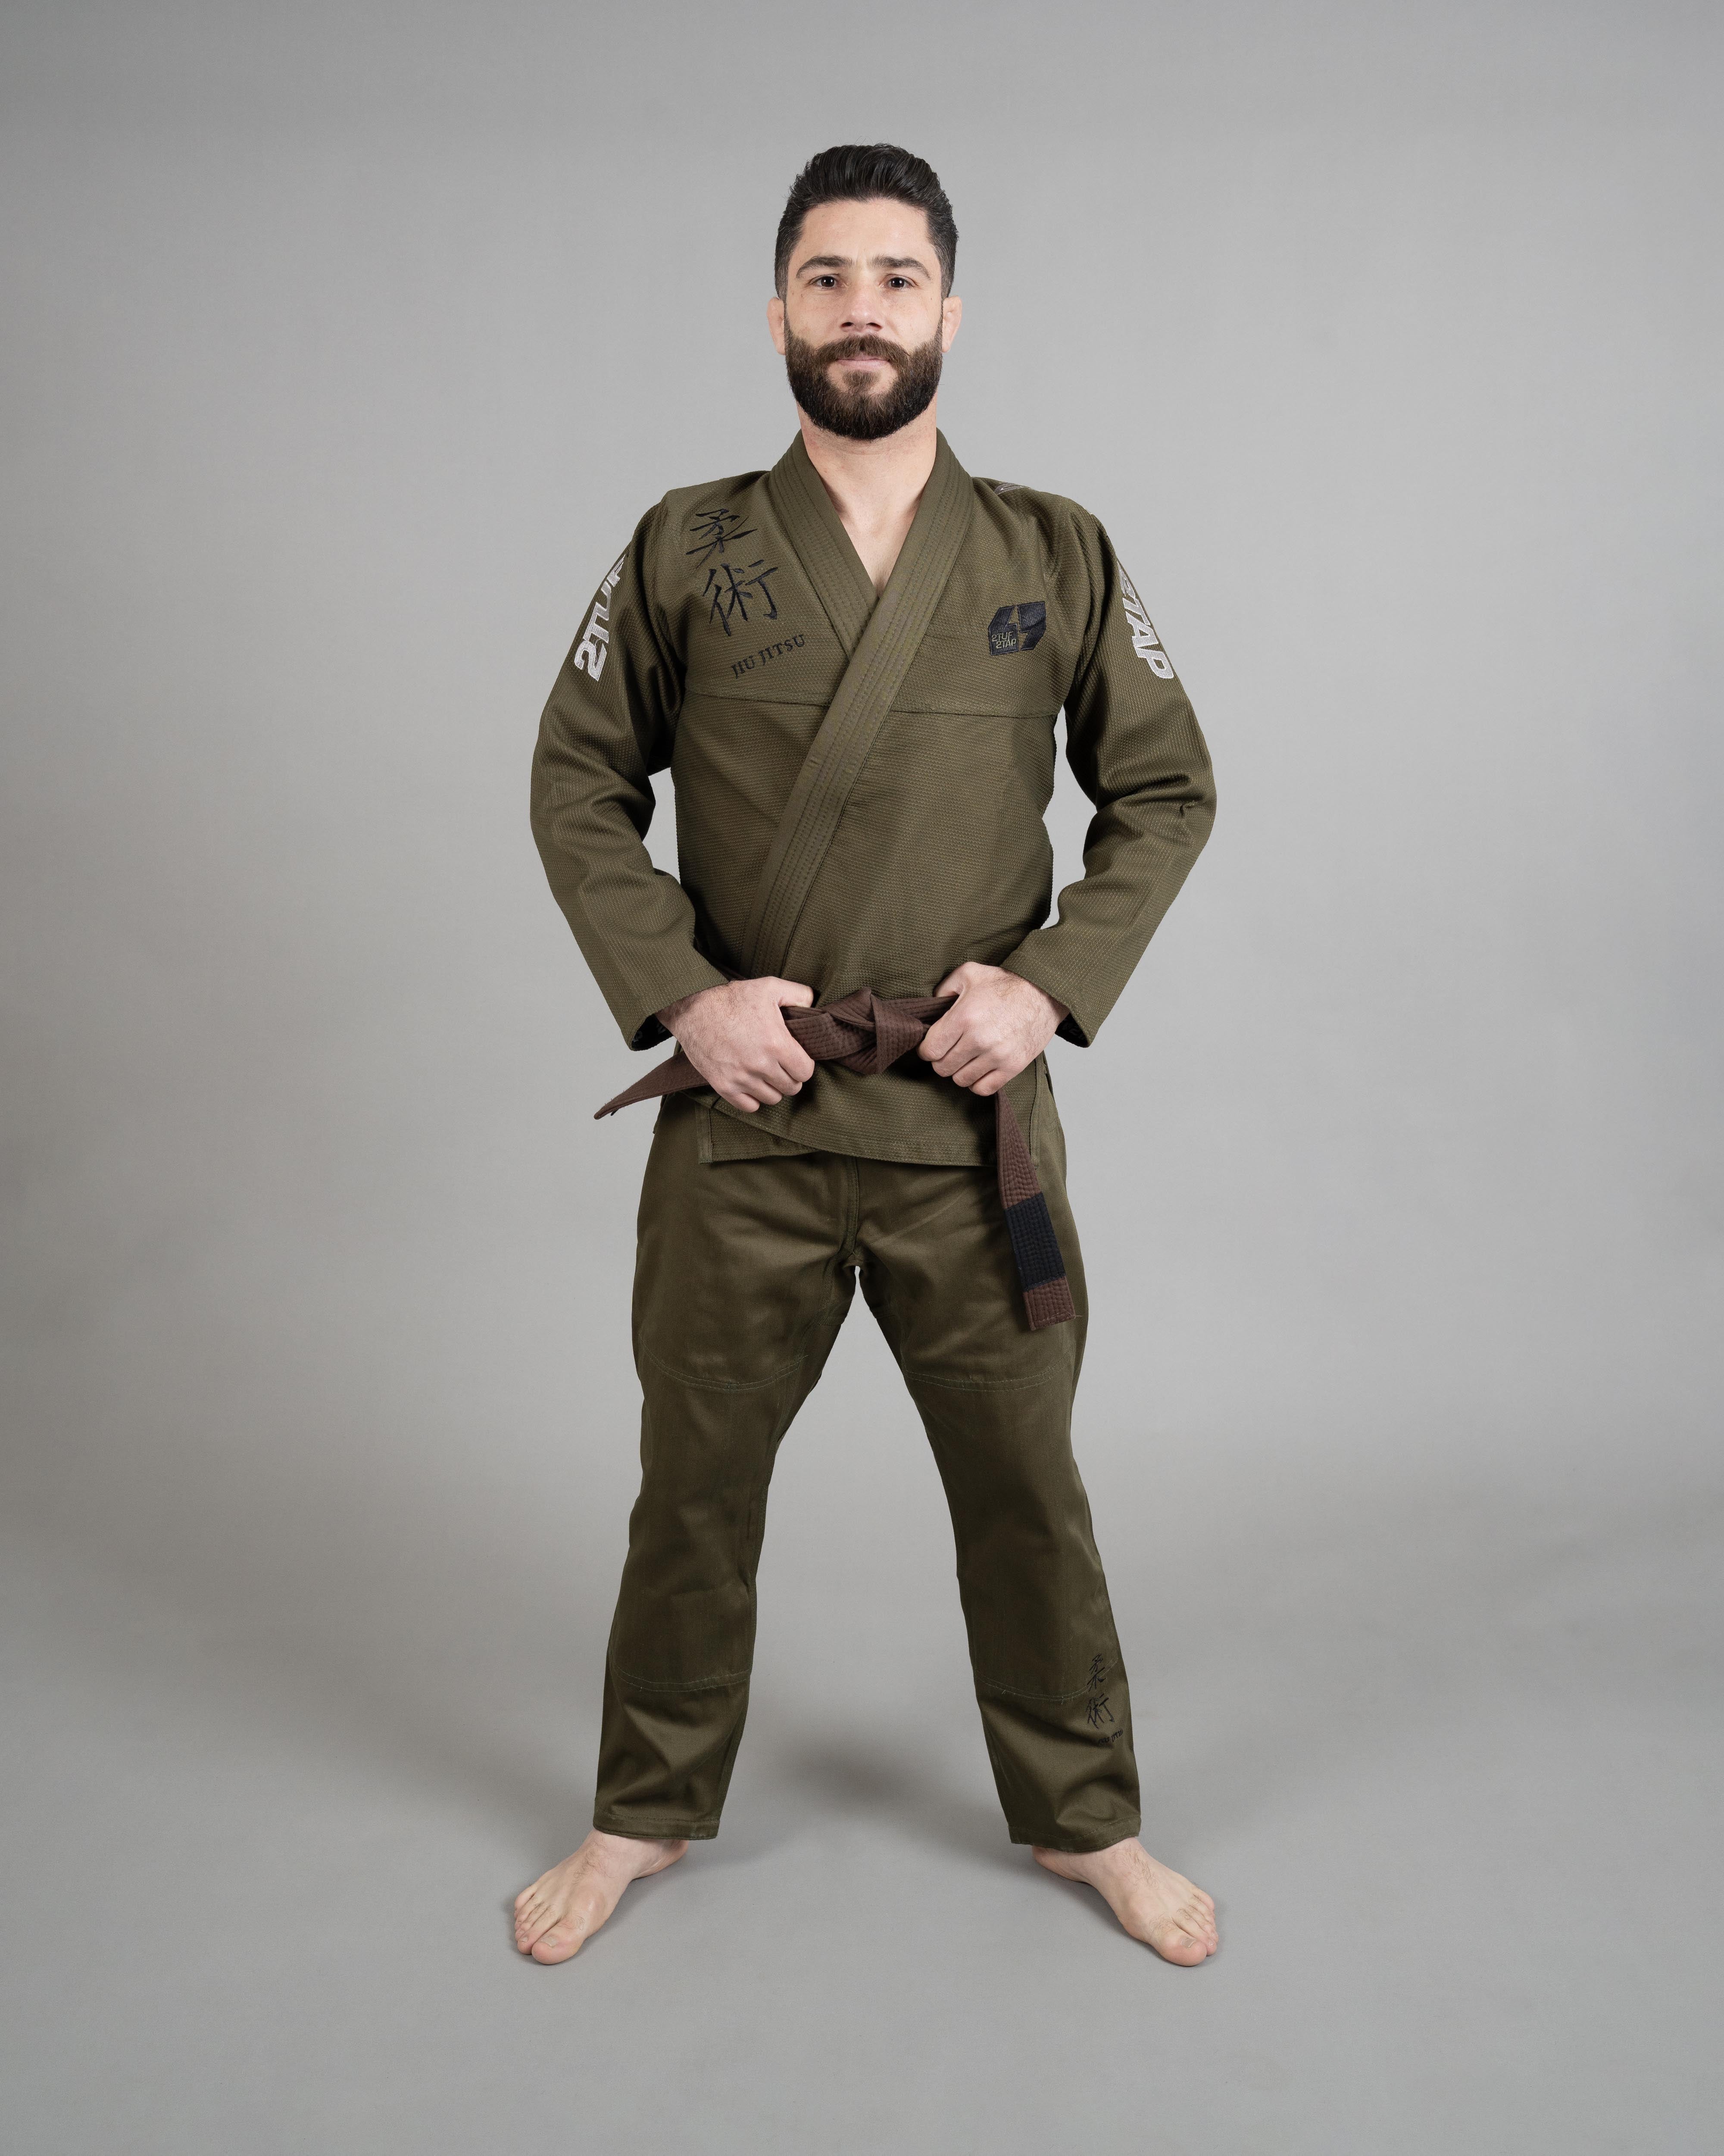 'Bridge' Jiu-Jitsu Gi Uniform - Olive Green/Black